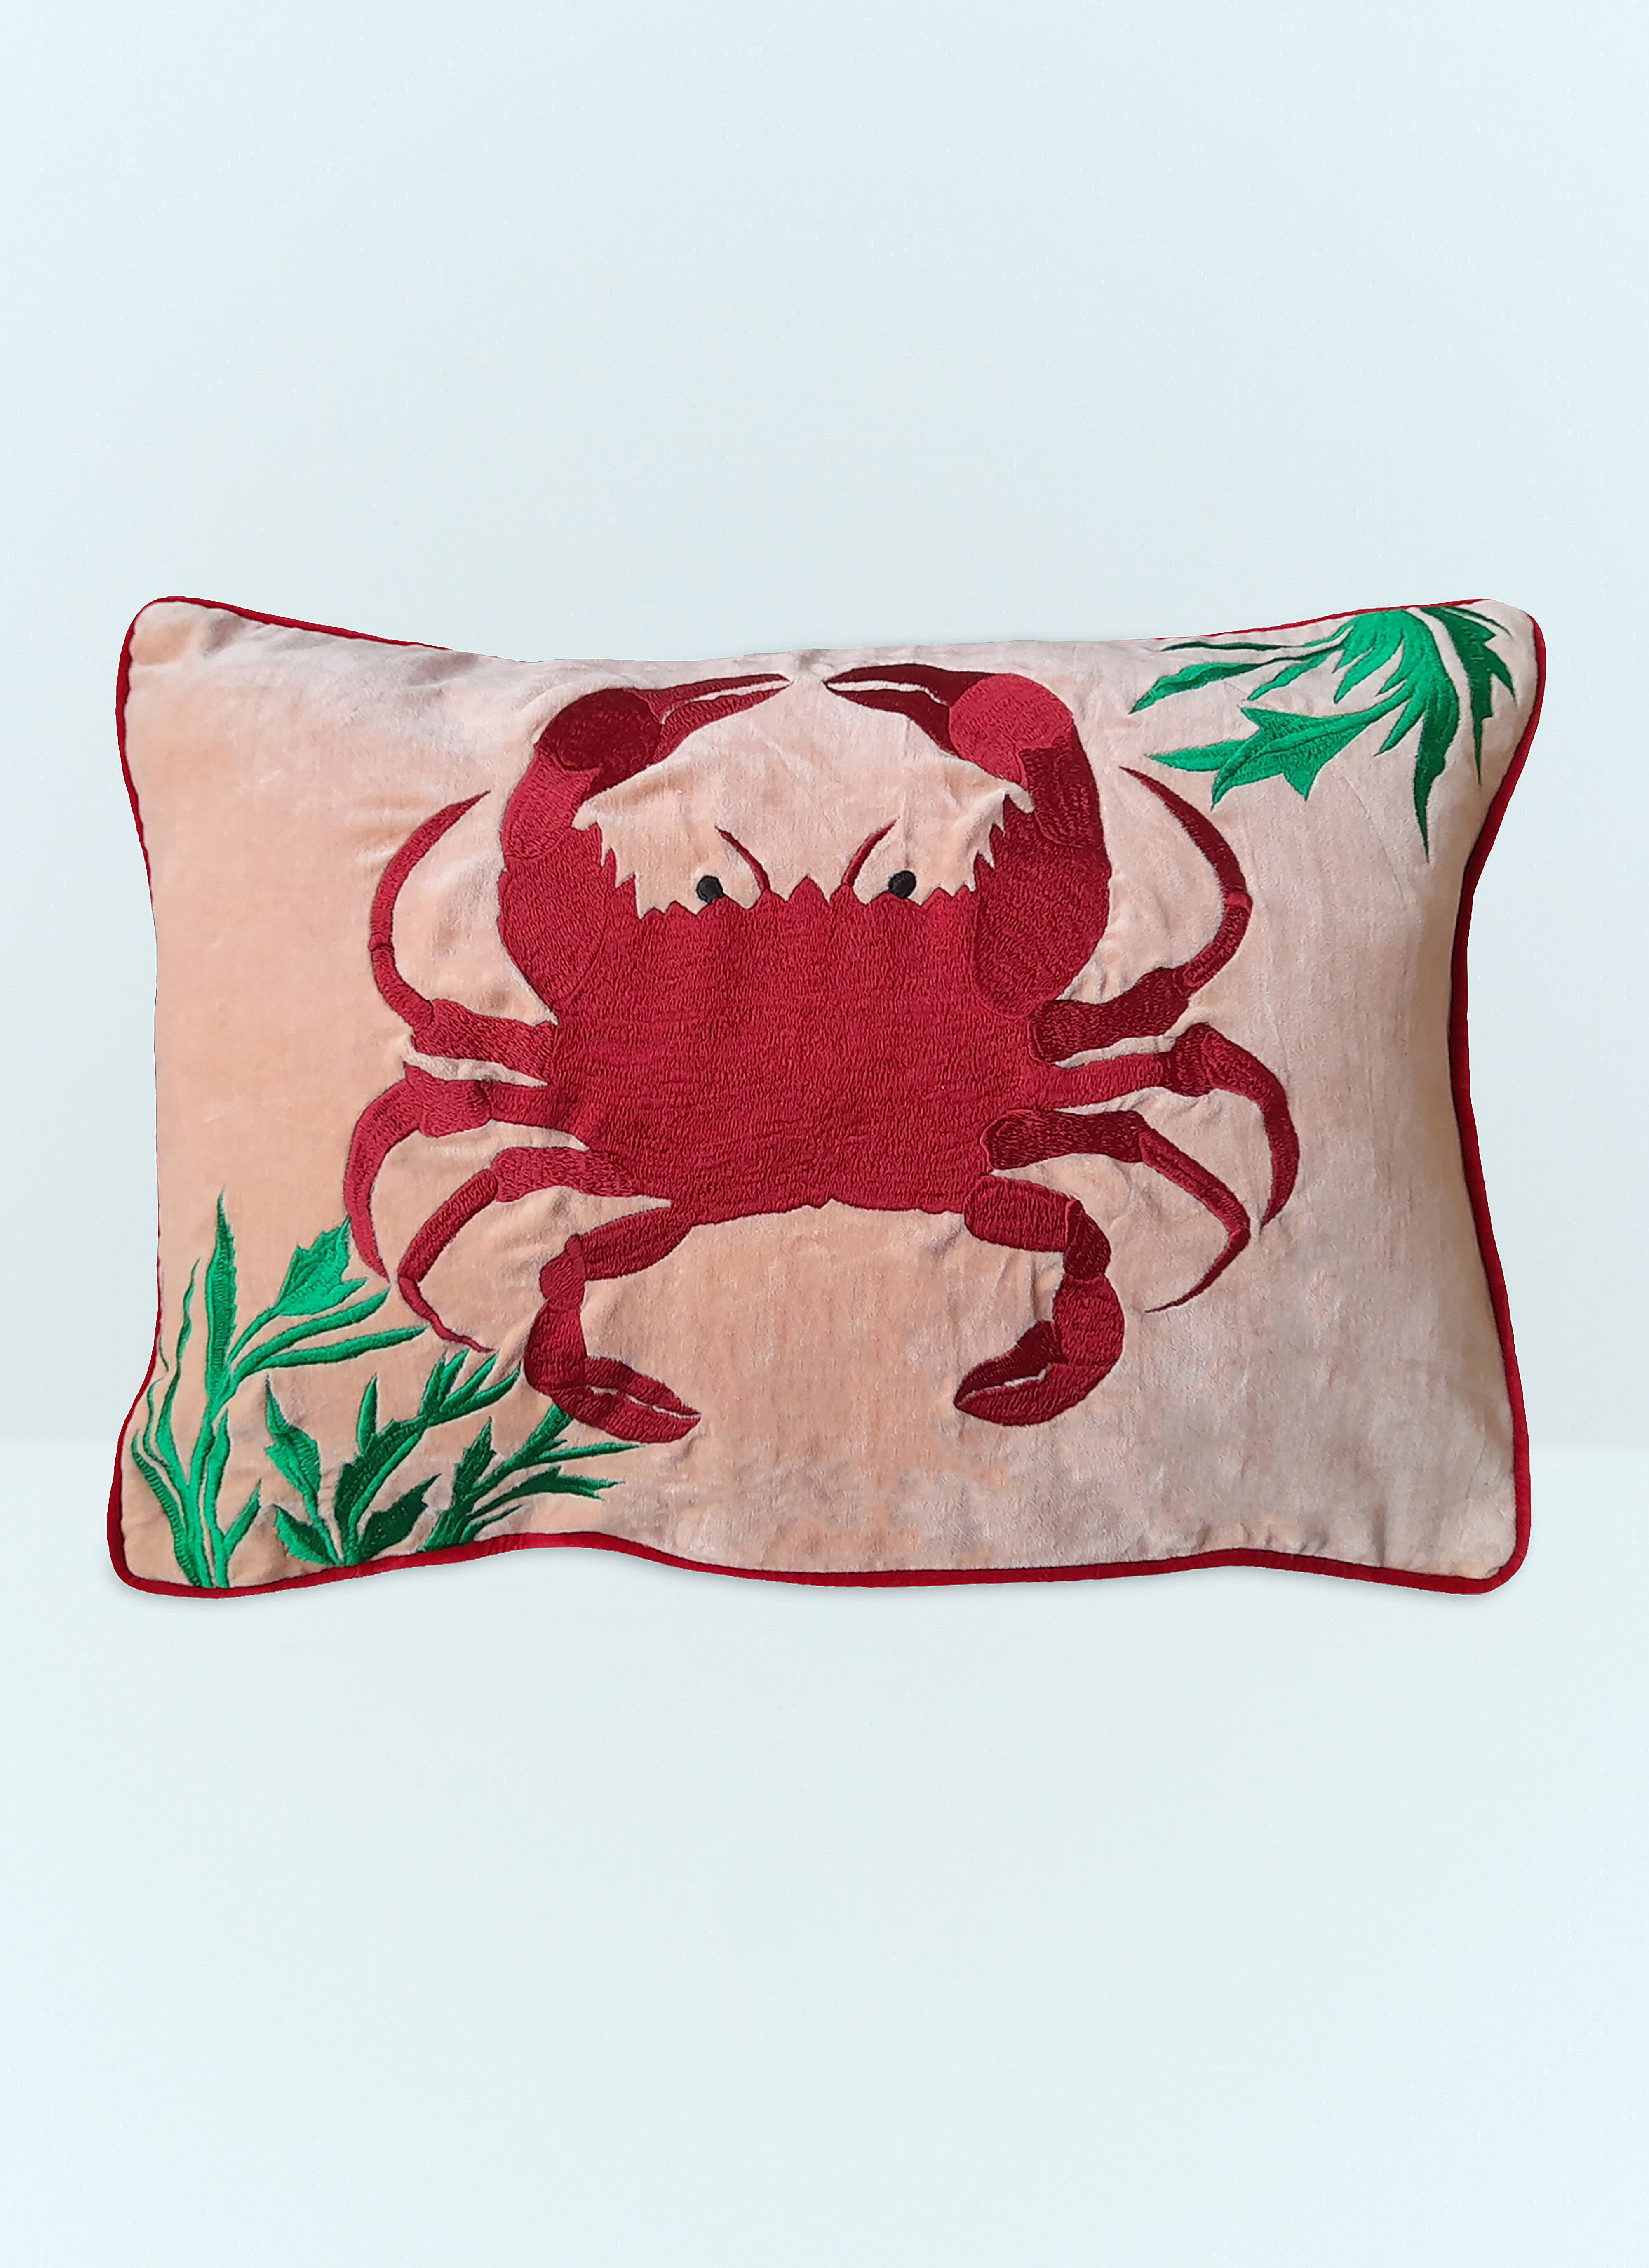 Les Ottomans Crab Embroidered Cushion Multicolour wps0691164